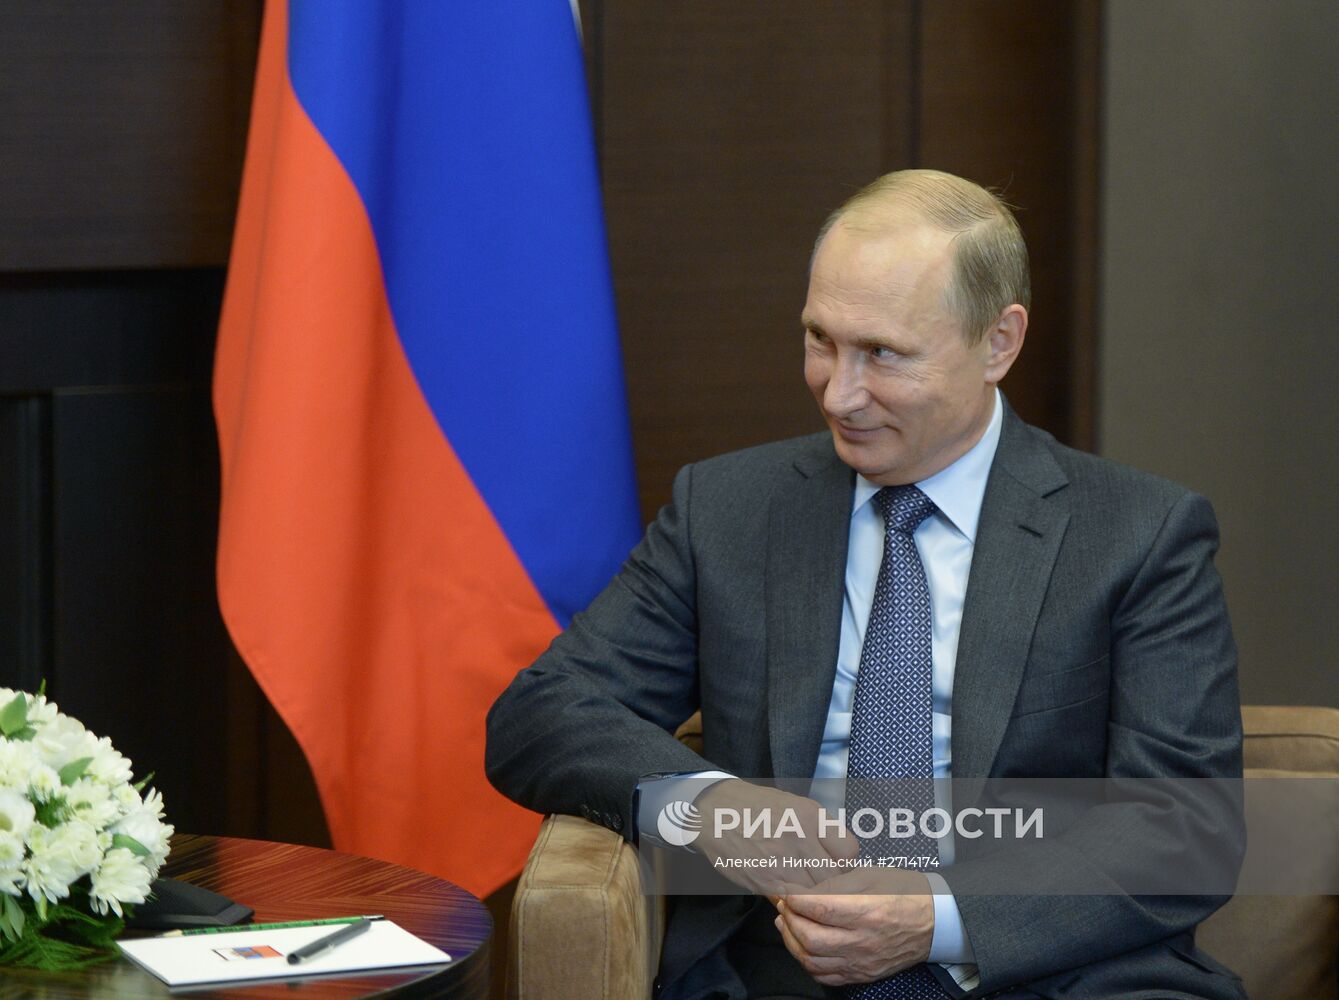 Президент РФ В.Путин встретился с президентом Киргизии А.Атамбаевым в Сочи